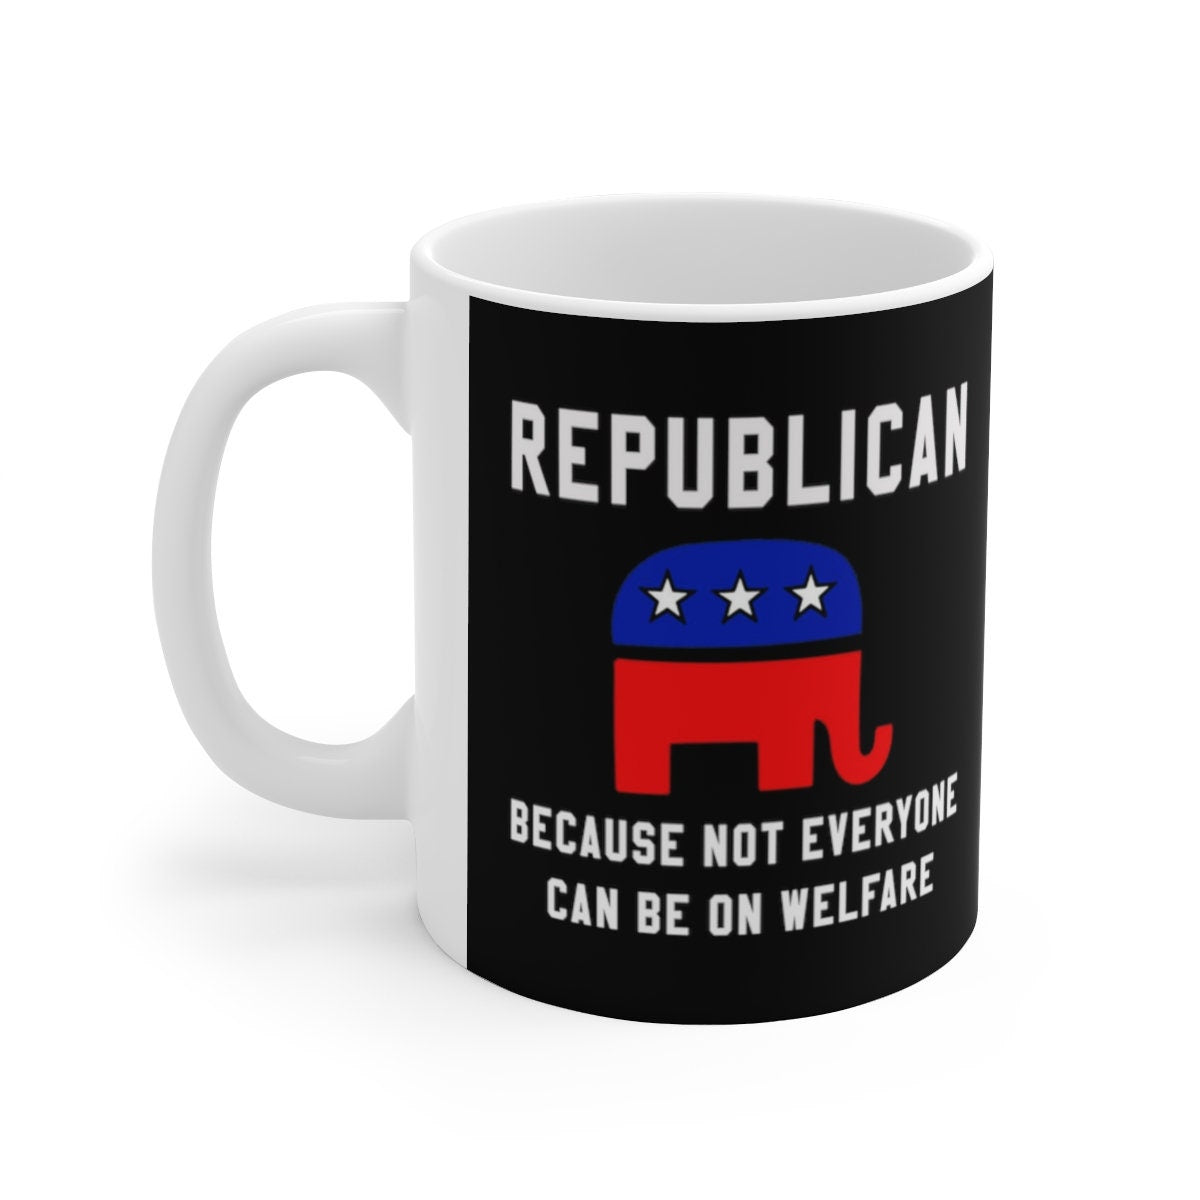 Републиканска шоља за кафу, републикански поклон, политичка шоља, републиканска Не могу сви бити на социјалној помоћи, подигнути републиканци, слонови, керамички 11оз - плусминусцо.цом